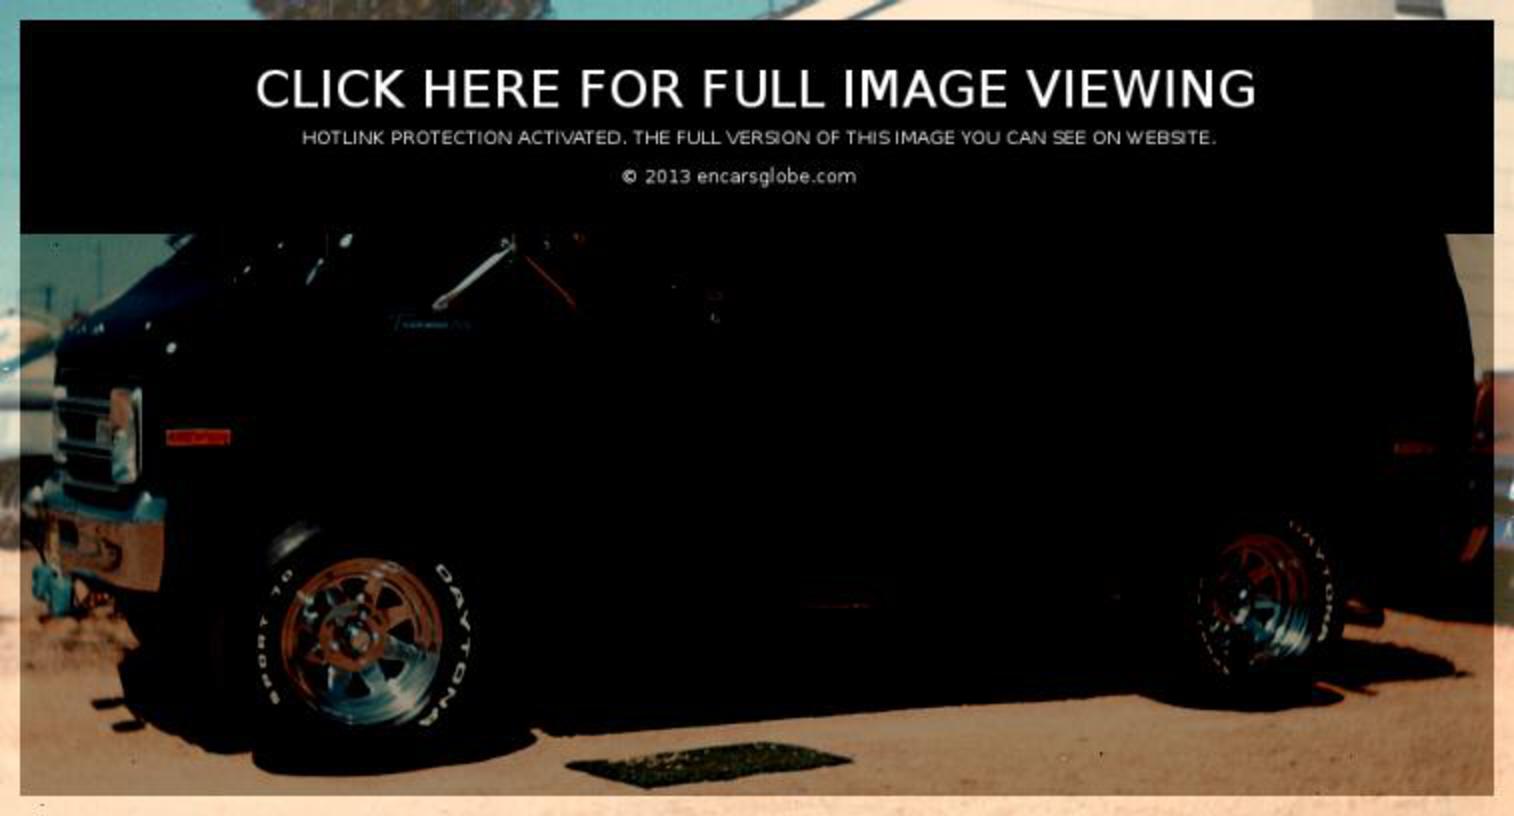 Dodge Series B van (07 image) Size: 757 x 408 px | image/jpeg | 45396 views